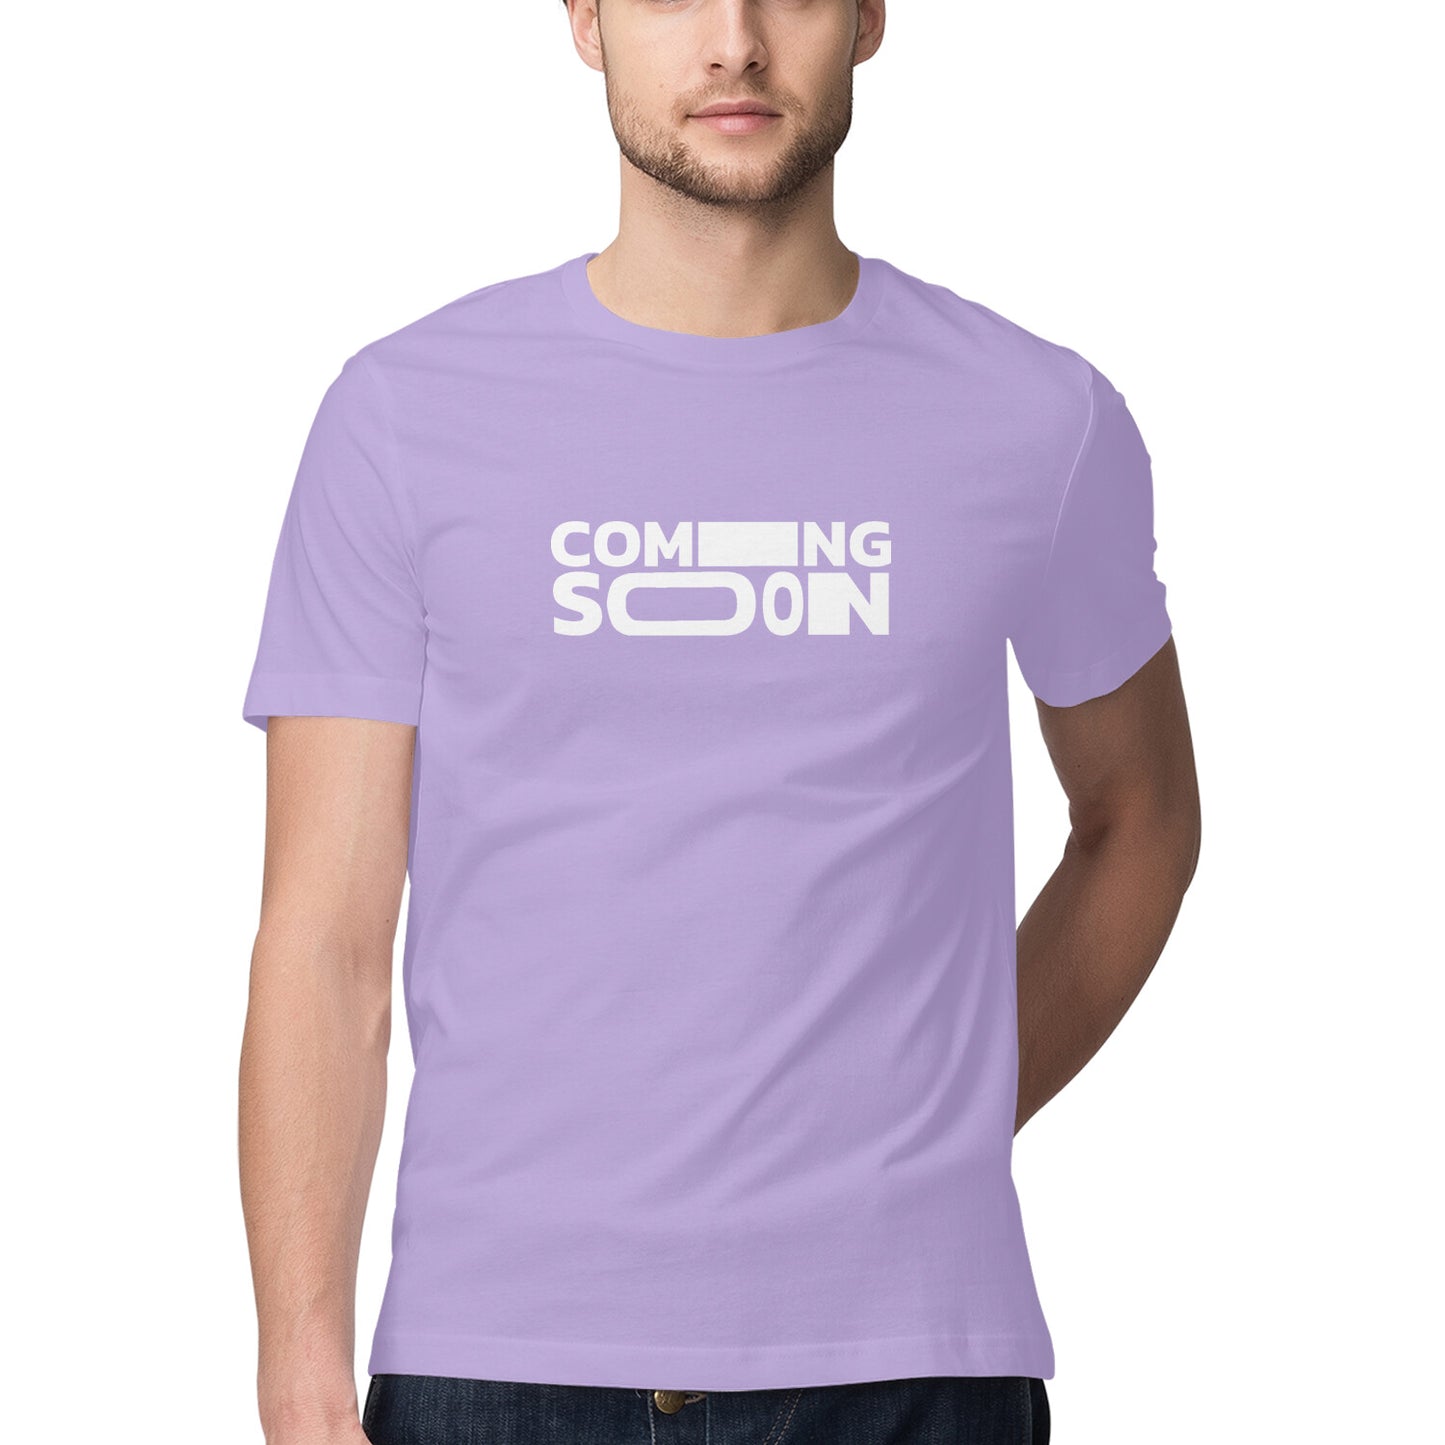 Coming Soon - Unisex Tshirt